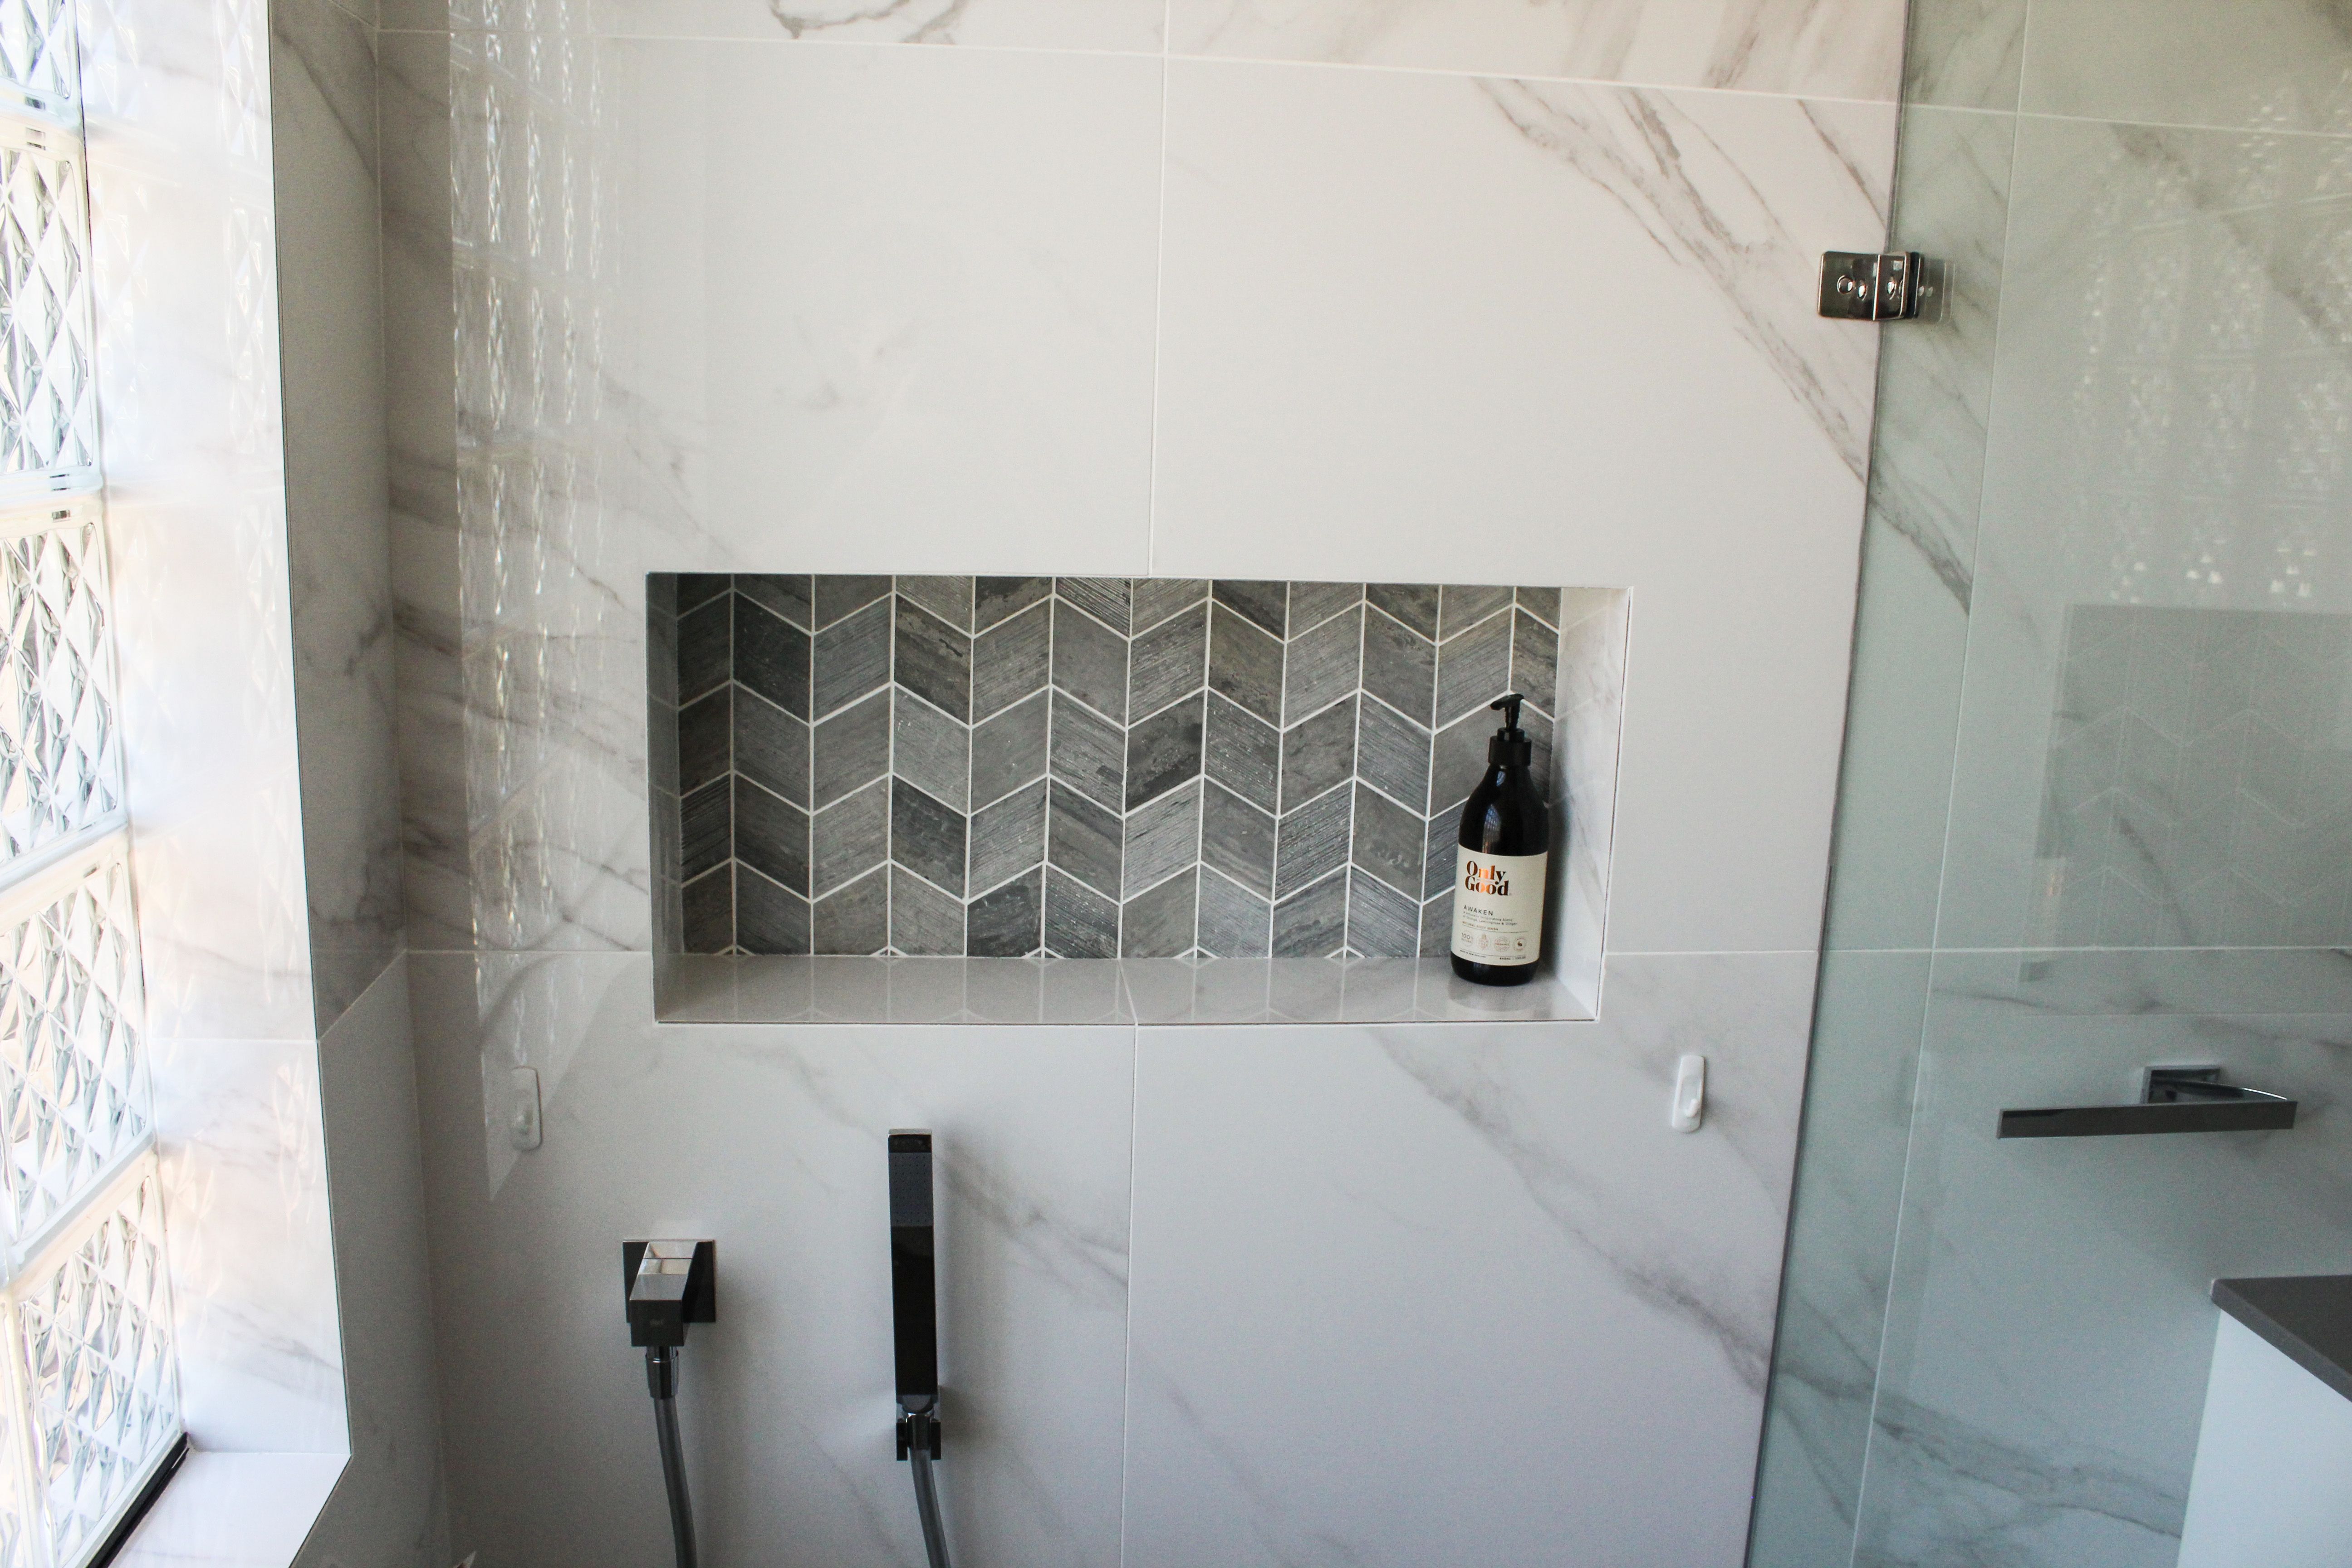 img/bathroom-tile-niche-shower-de.jpg